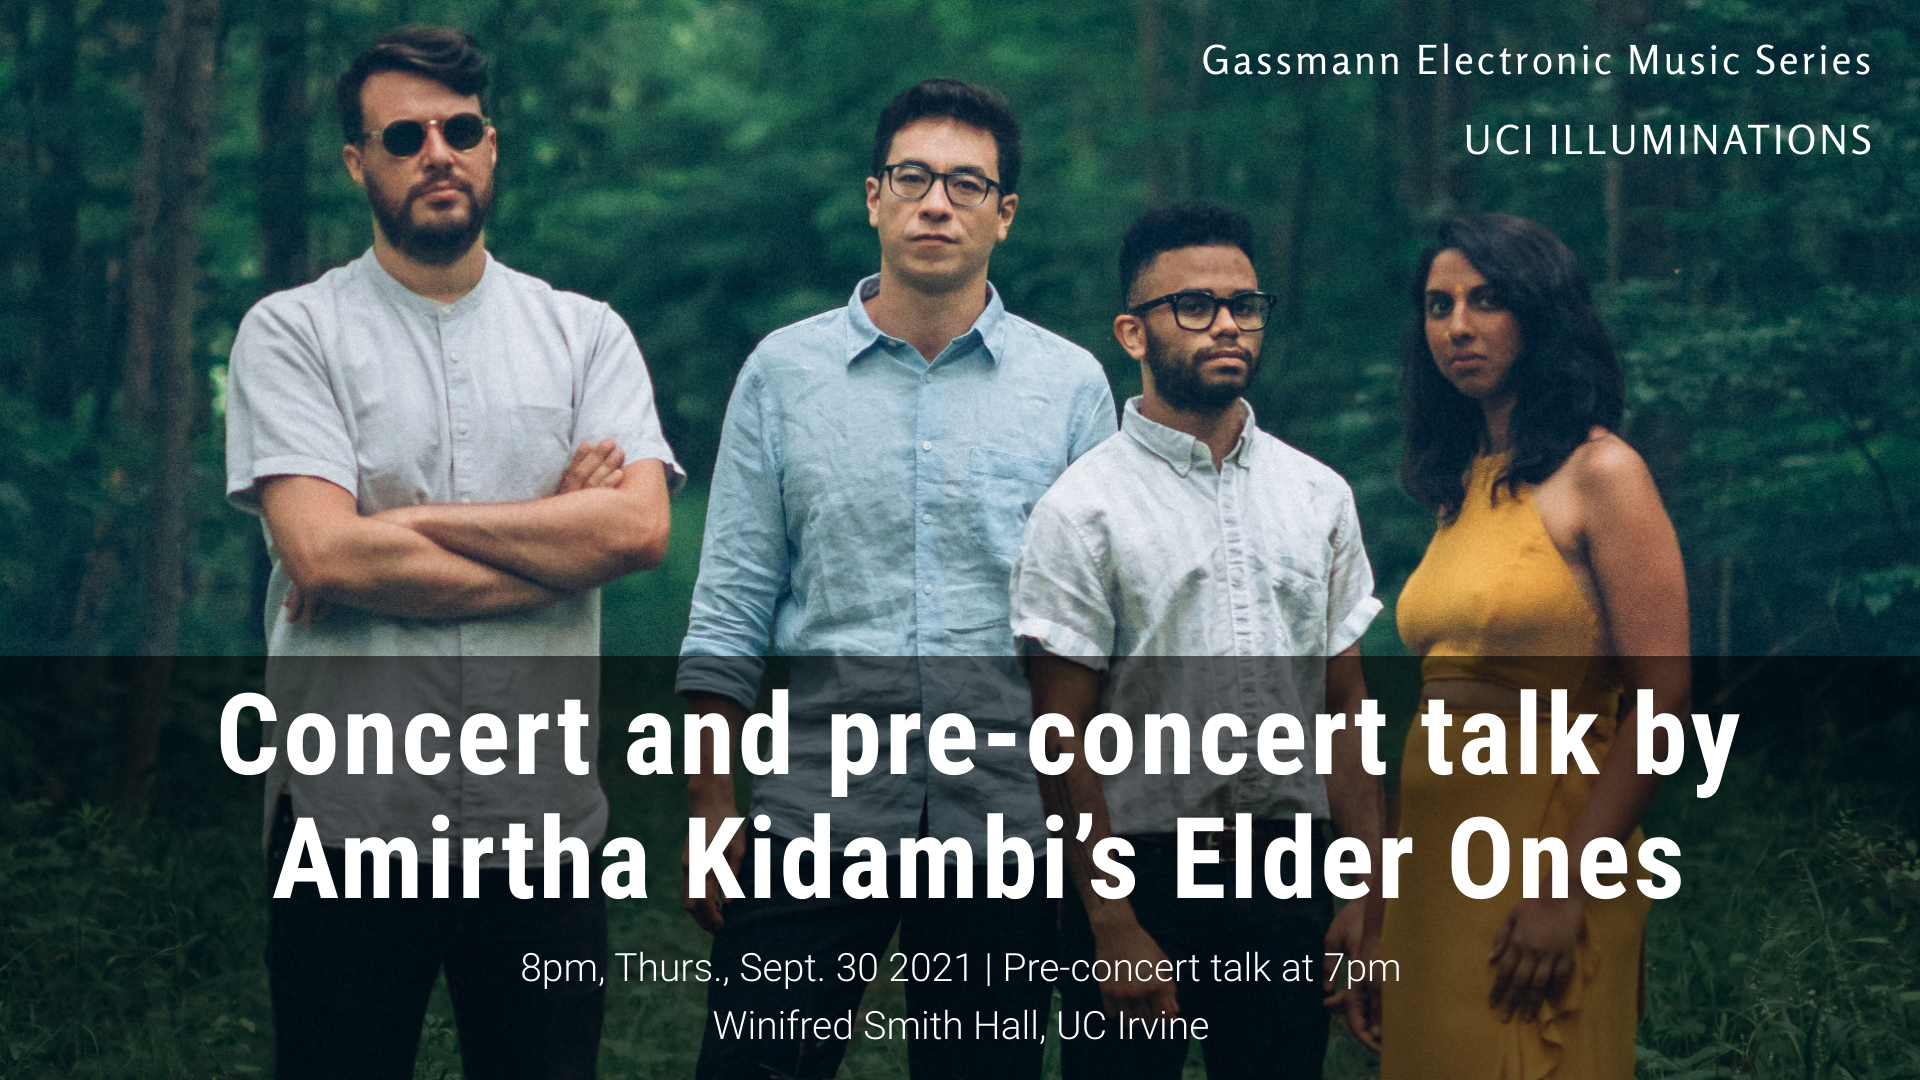 Concert and pre-concert talk by Amirtha Kidambi’s Elder Ones